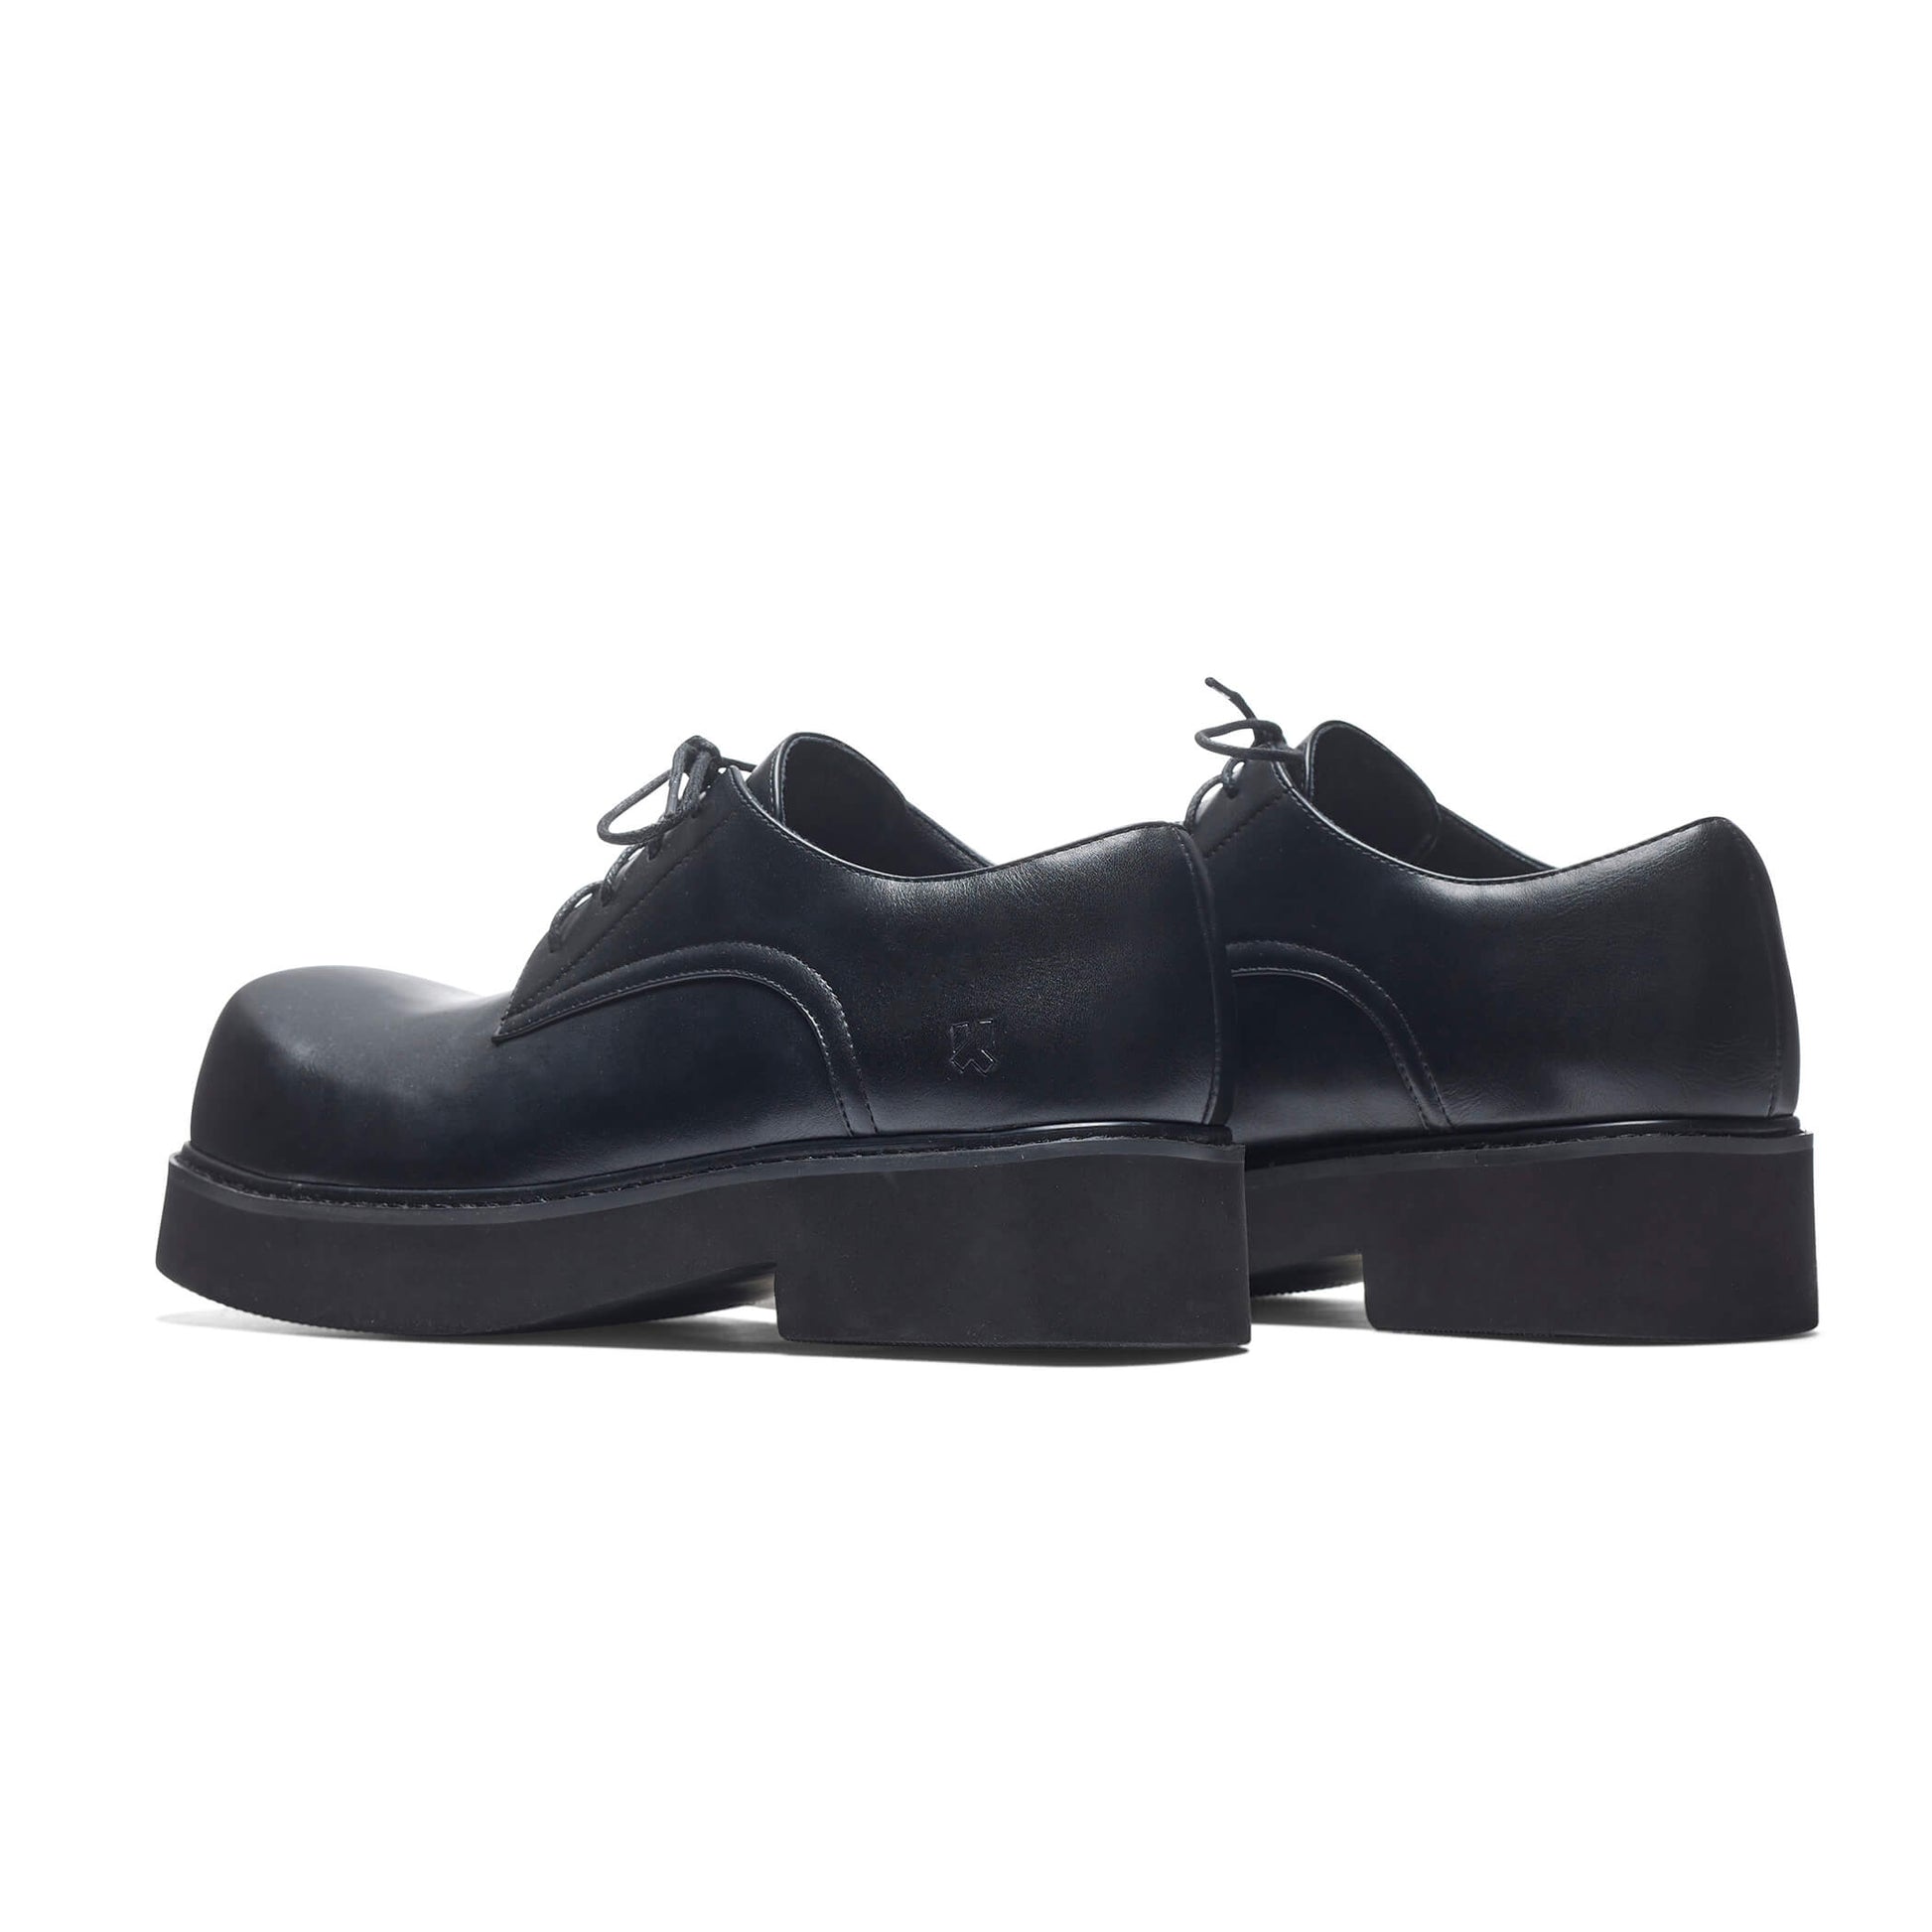 400% Oversized Men's Derby Shoes - Black - Koi Footwear - Back View